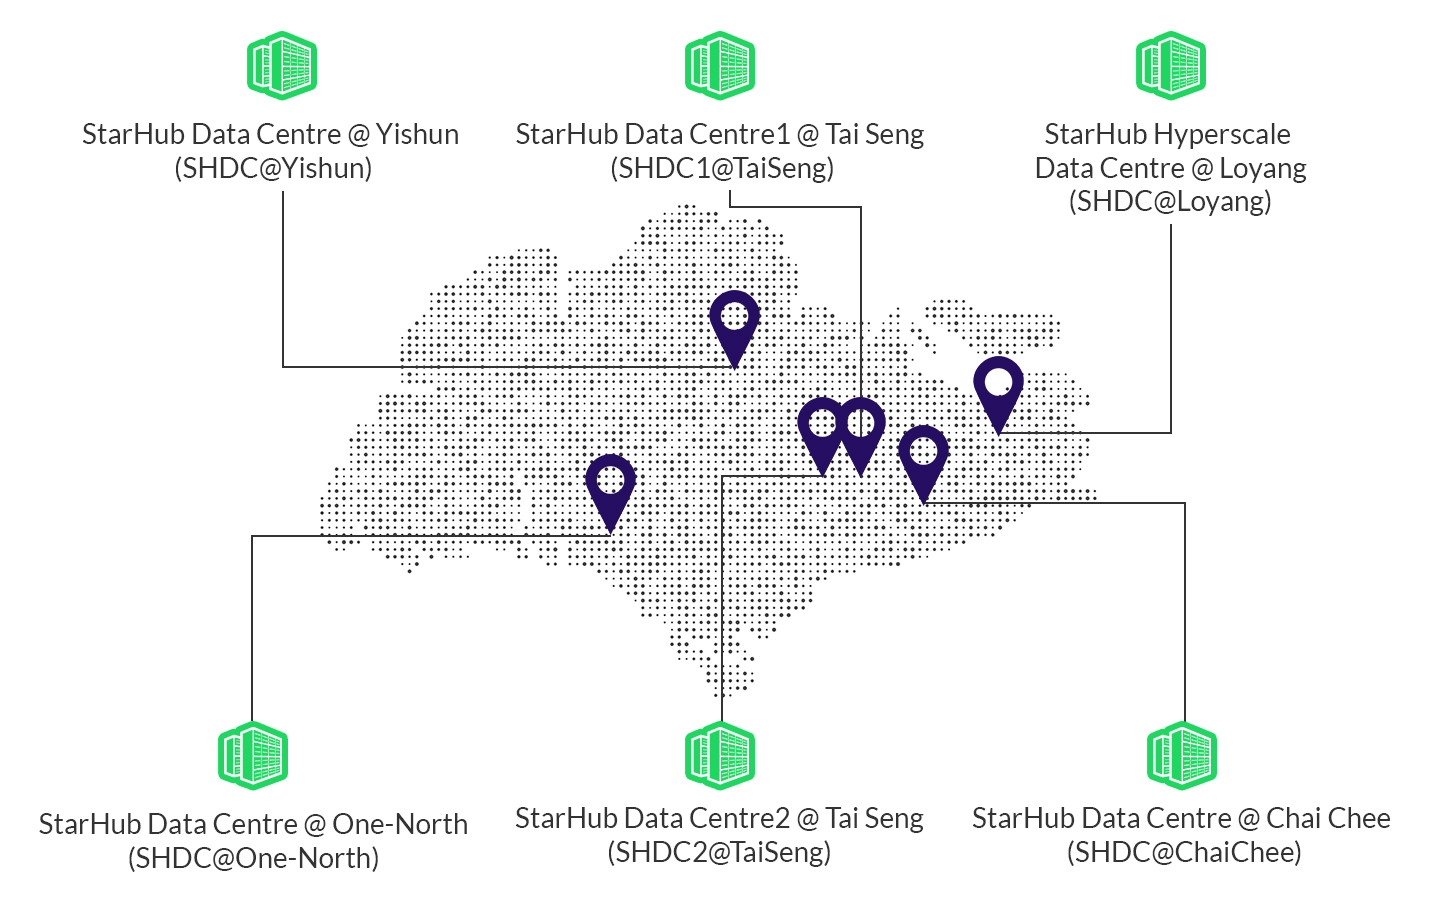 StarHub Data Centres